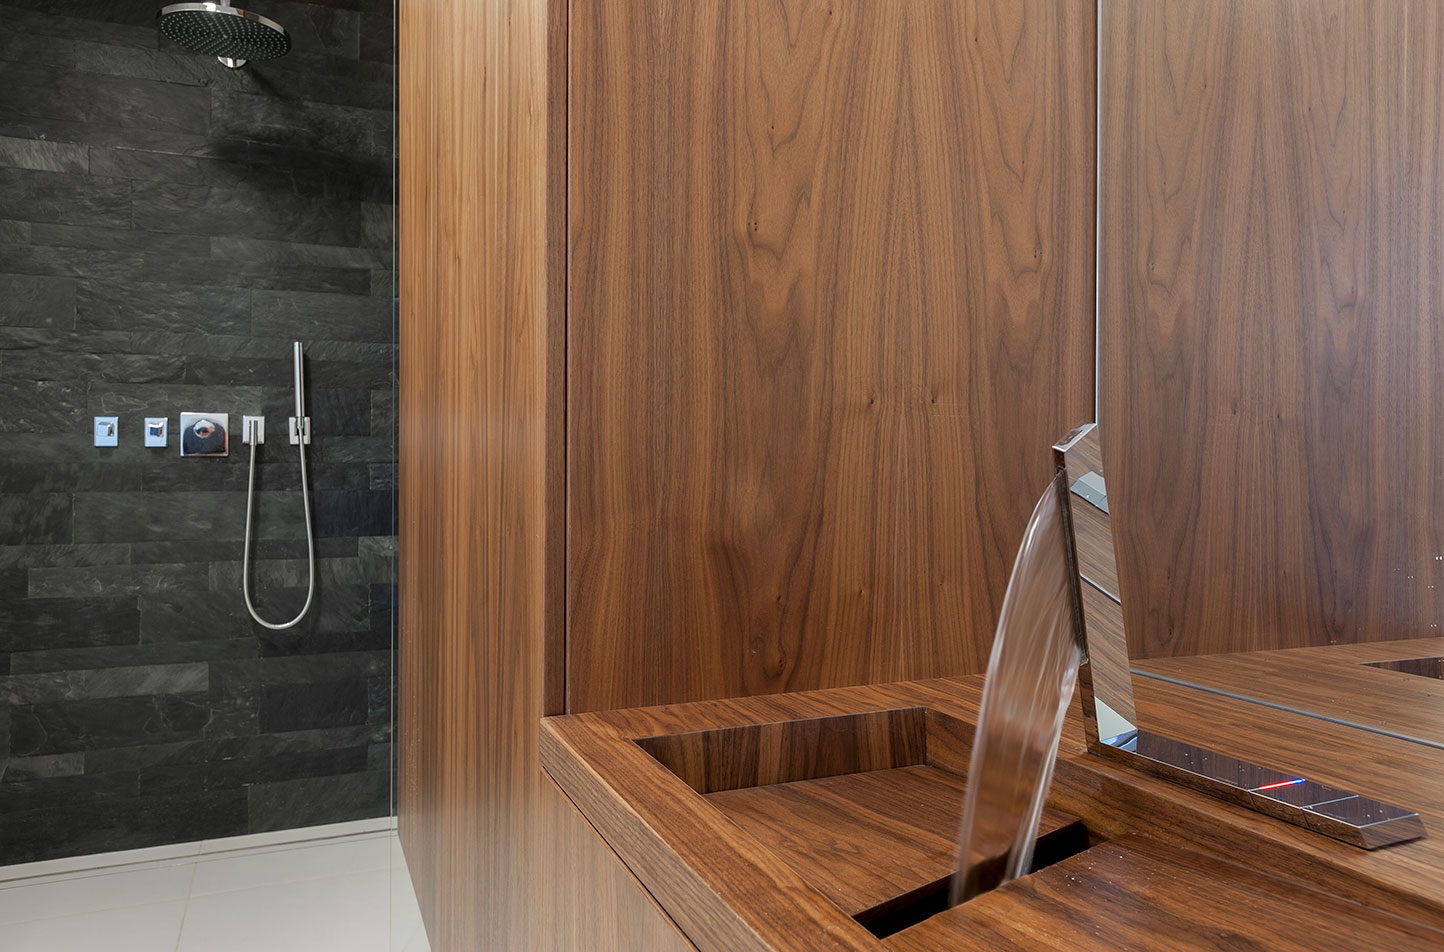 Image no. 3 of Custom bathroom in wood - Mobius: Edge House